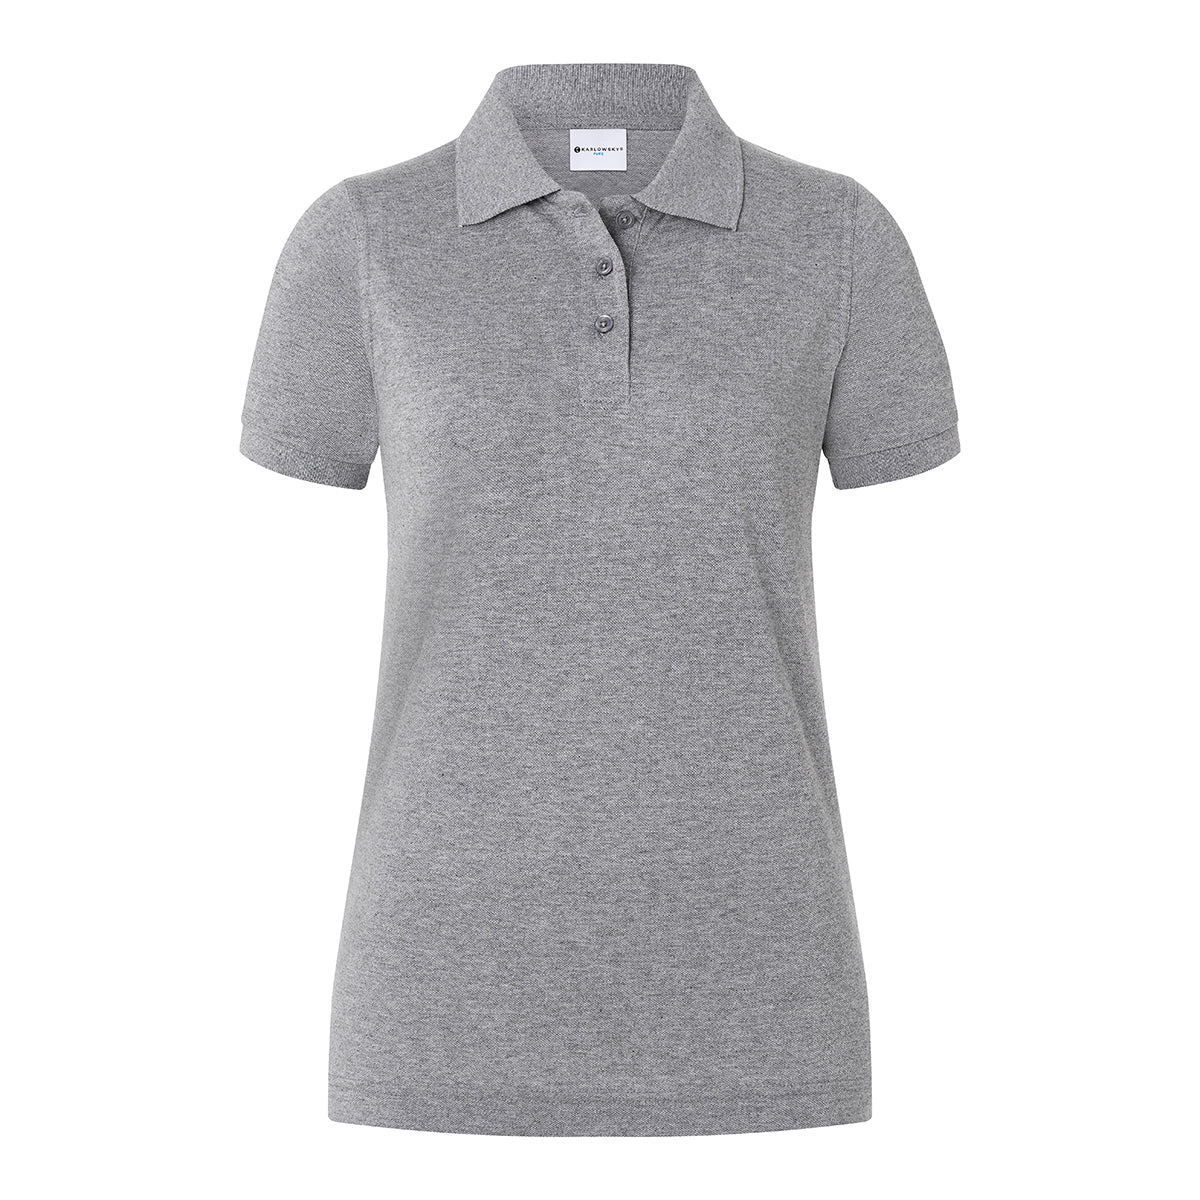 Karlowsky - Arbejdsbeklædning Basic Poloshirt til damer - Lys Grå - Størrelse: L